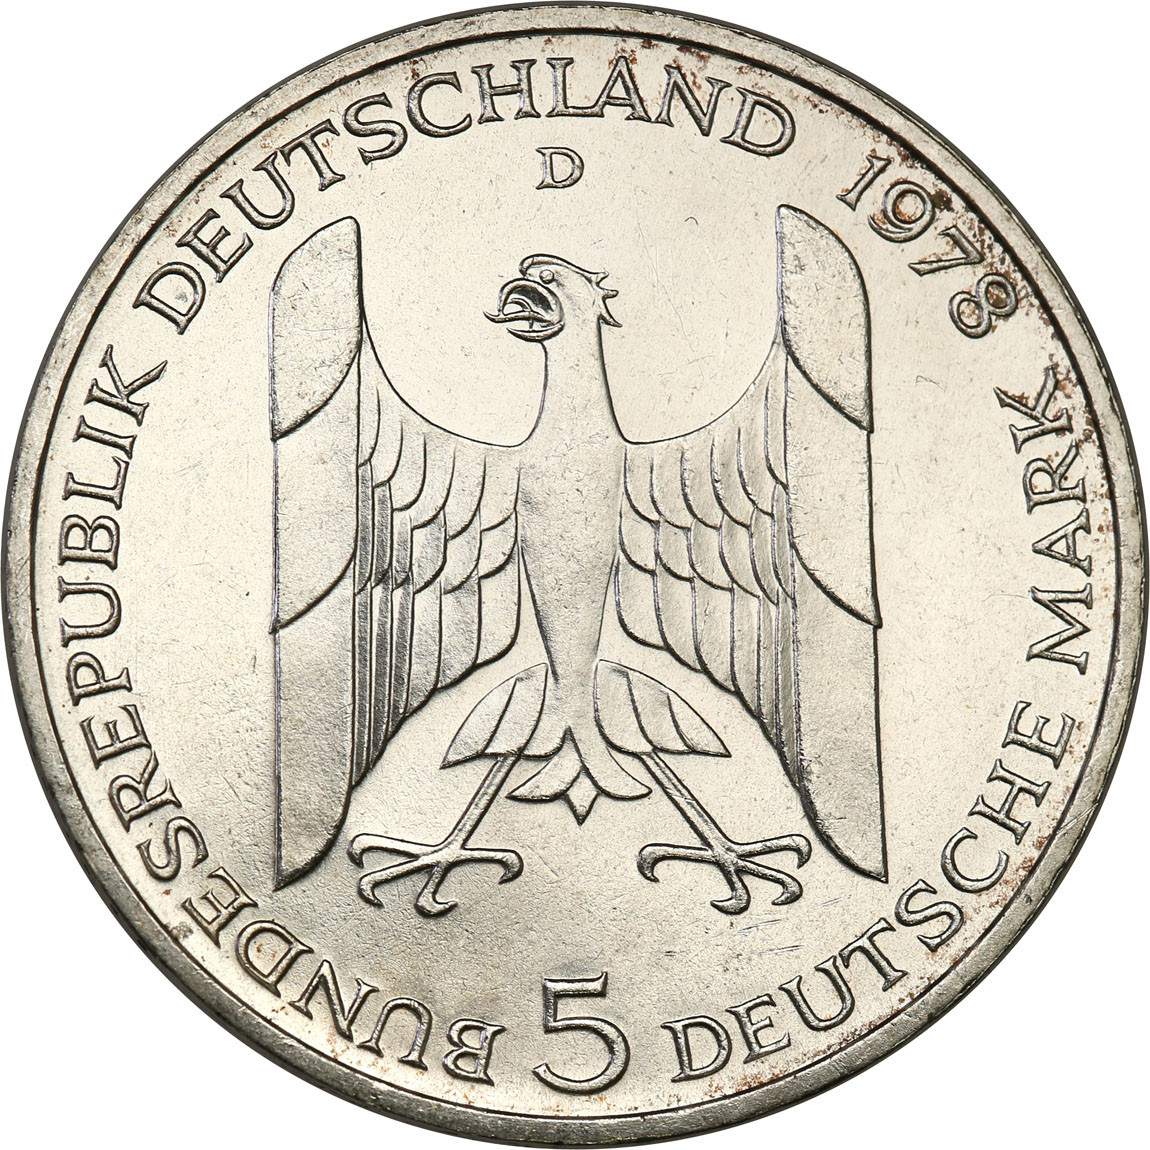 Niemcy, RFN. 5 marek 1978 D, Monachium, Gustav Stresemann